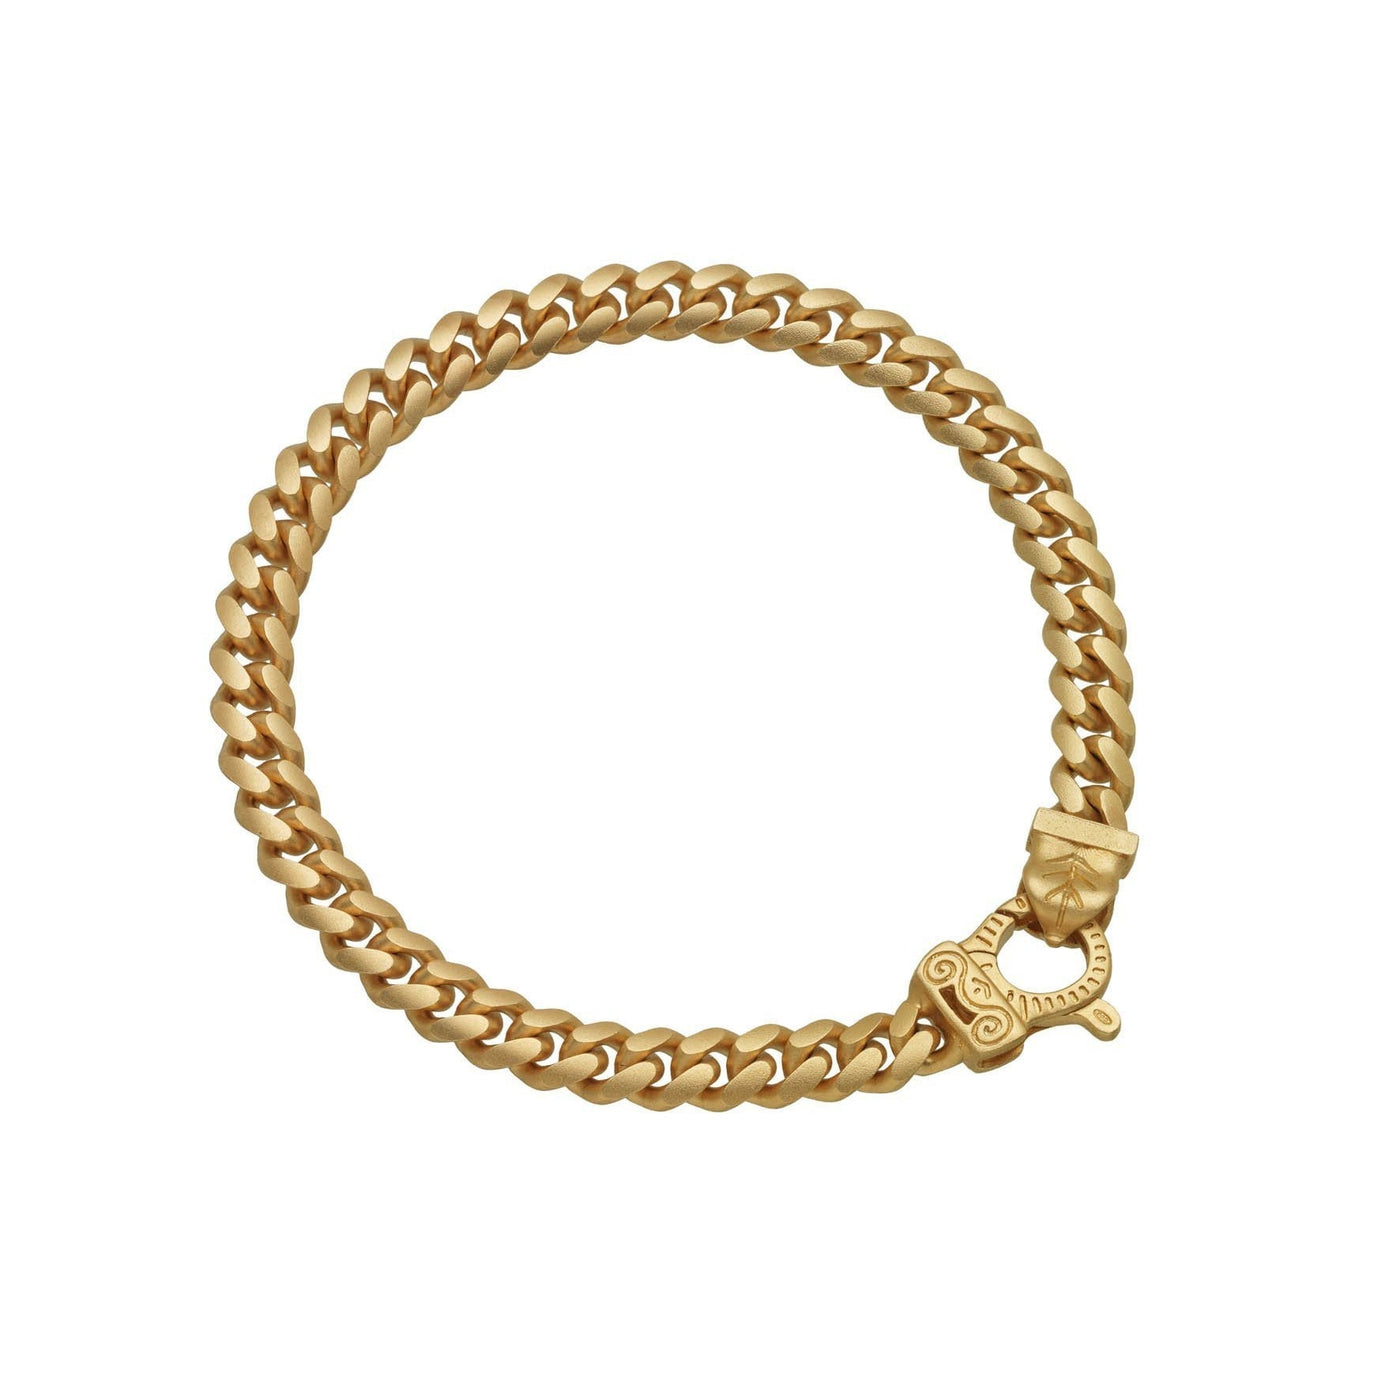 FLAMING TONGUE Cuban Link Bracelet with 18kt Yellow Gold Vermeil